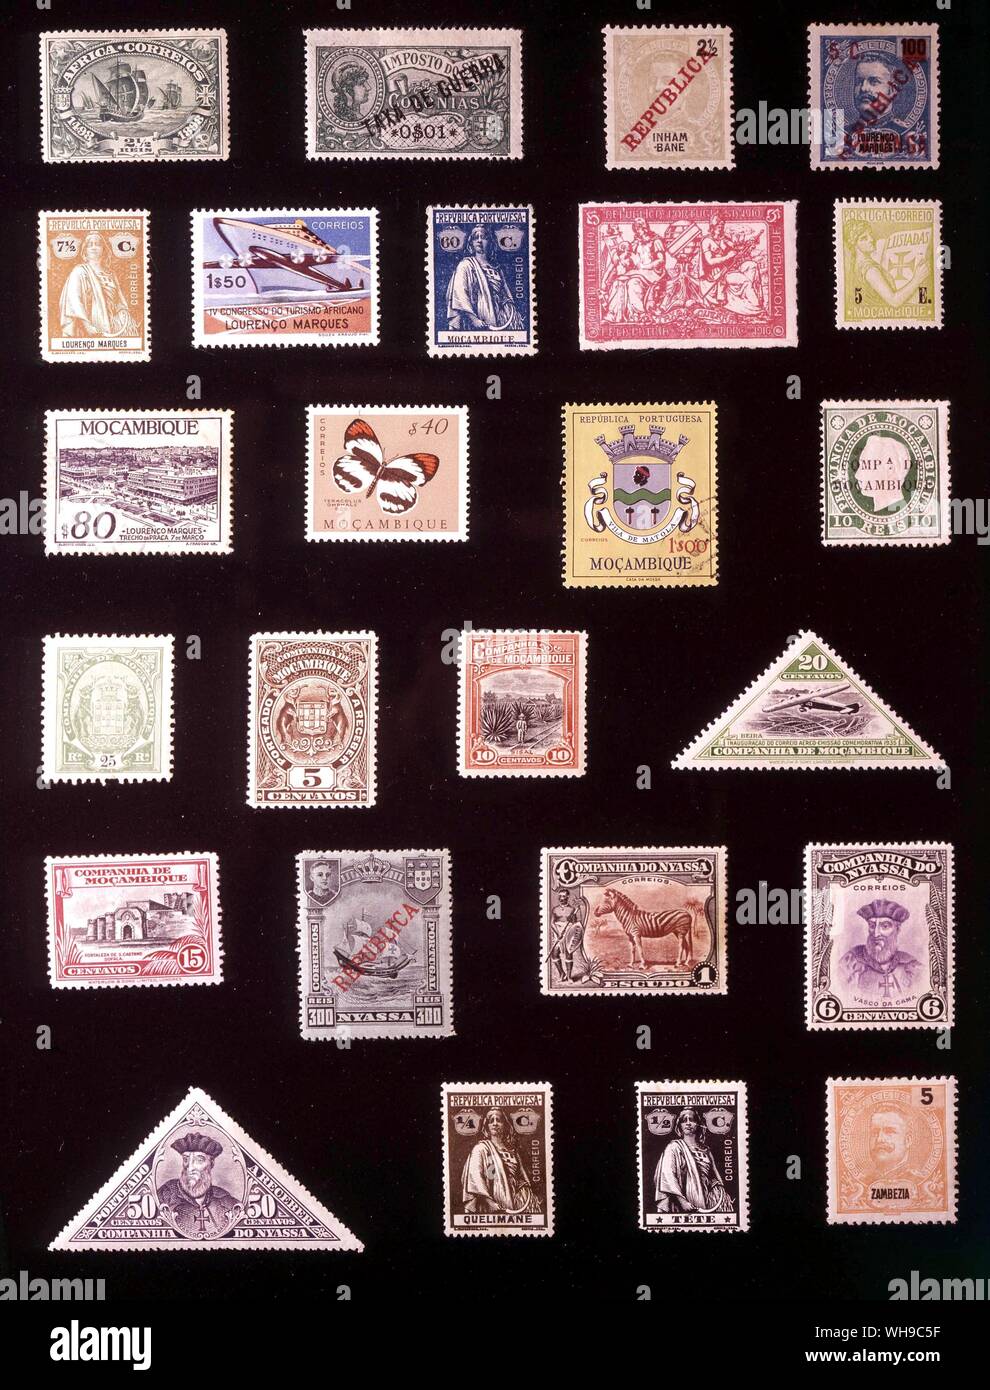 AFRICA - PORTUGUESE EAST AFRICA: (left to right) 1. Portuguese Africa, 2.5 reis, 1898, 2. Portuguese Africa, 1 centavo, 1919, 3. Inhambane, 2.5 reis, 1911, 4. Kionga, 5 centavos, 1916, 5. Lourenco marques, 7.5 centavos, 1914, 6. Lourenco marques, 1.50 escudos, 1952, 7. Mozambique, 60 centavos, 1922, 8. Mozambique, 5 centavos, 1916, 9. Mozambique, 5 escudos, 1933, 10. Mozambique, 5 escudos, 1933, 11. Mozambique, 80 centavos, 1948, 12. Mozambique, 1 escudo, 1961, 13. Mozambique Company, 10 reis, 1892, 14. Mozambique Company, 25 reis, 1895, 15. Mozambique Company, 5 centavos, 1919, 16. Stock Photo